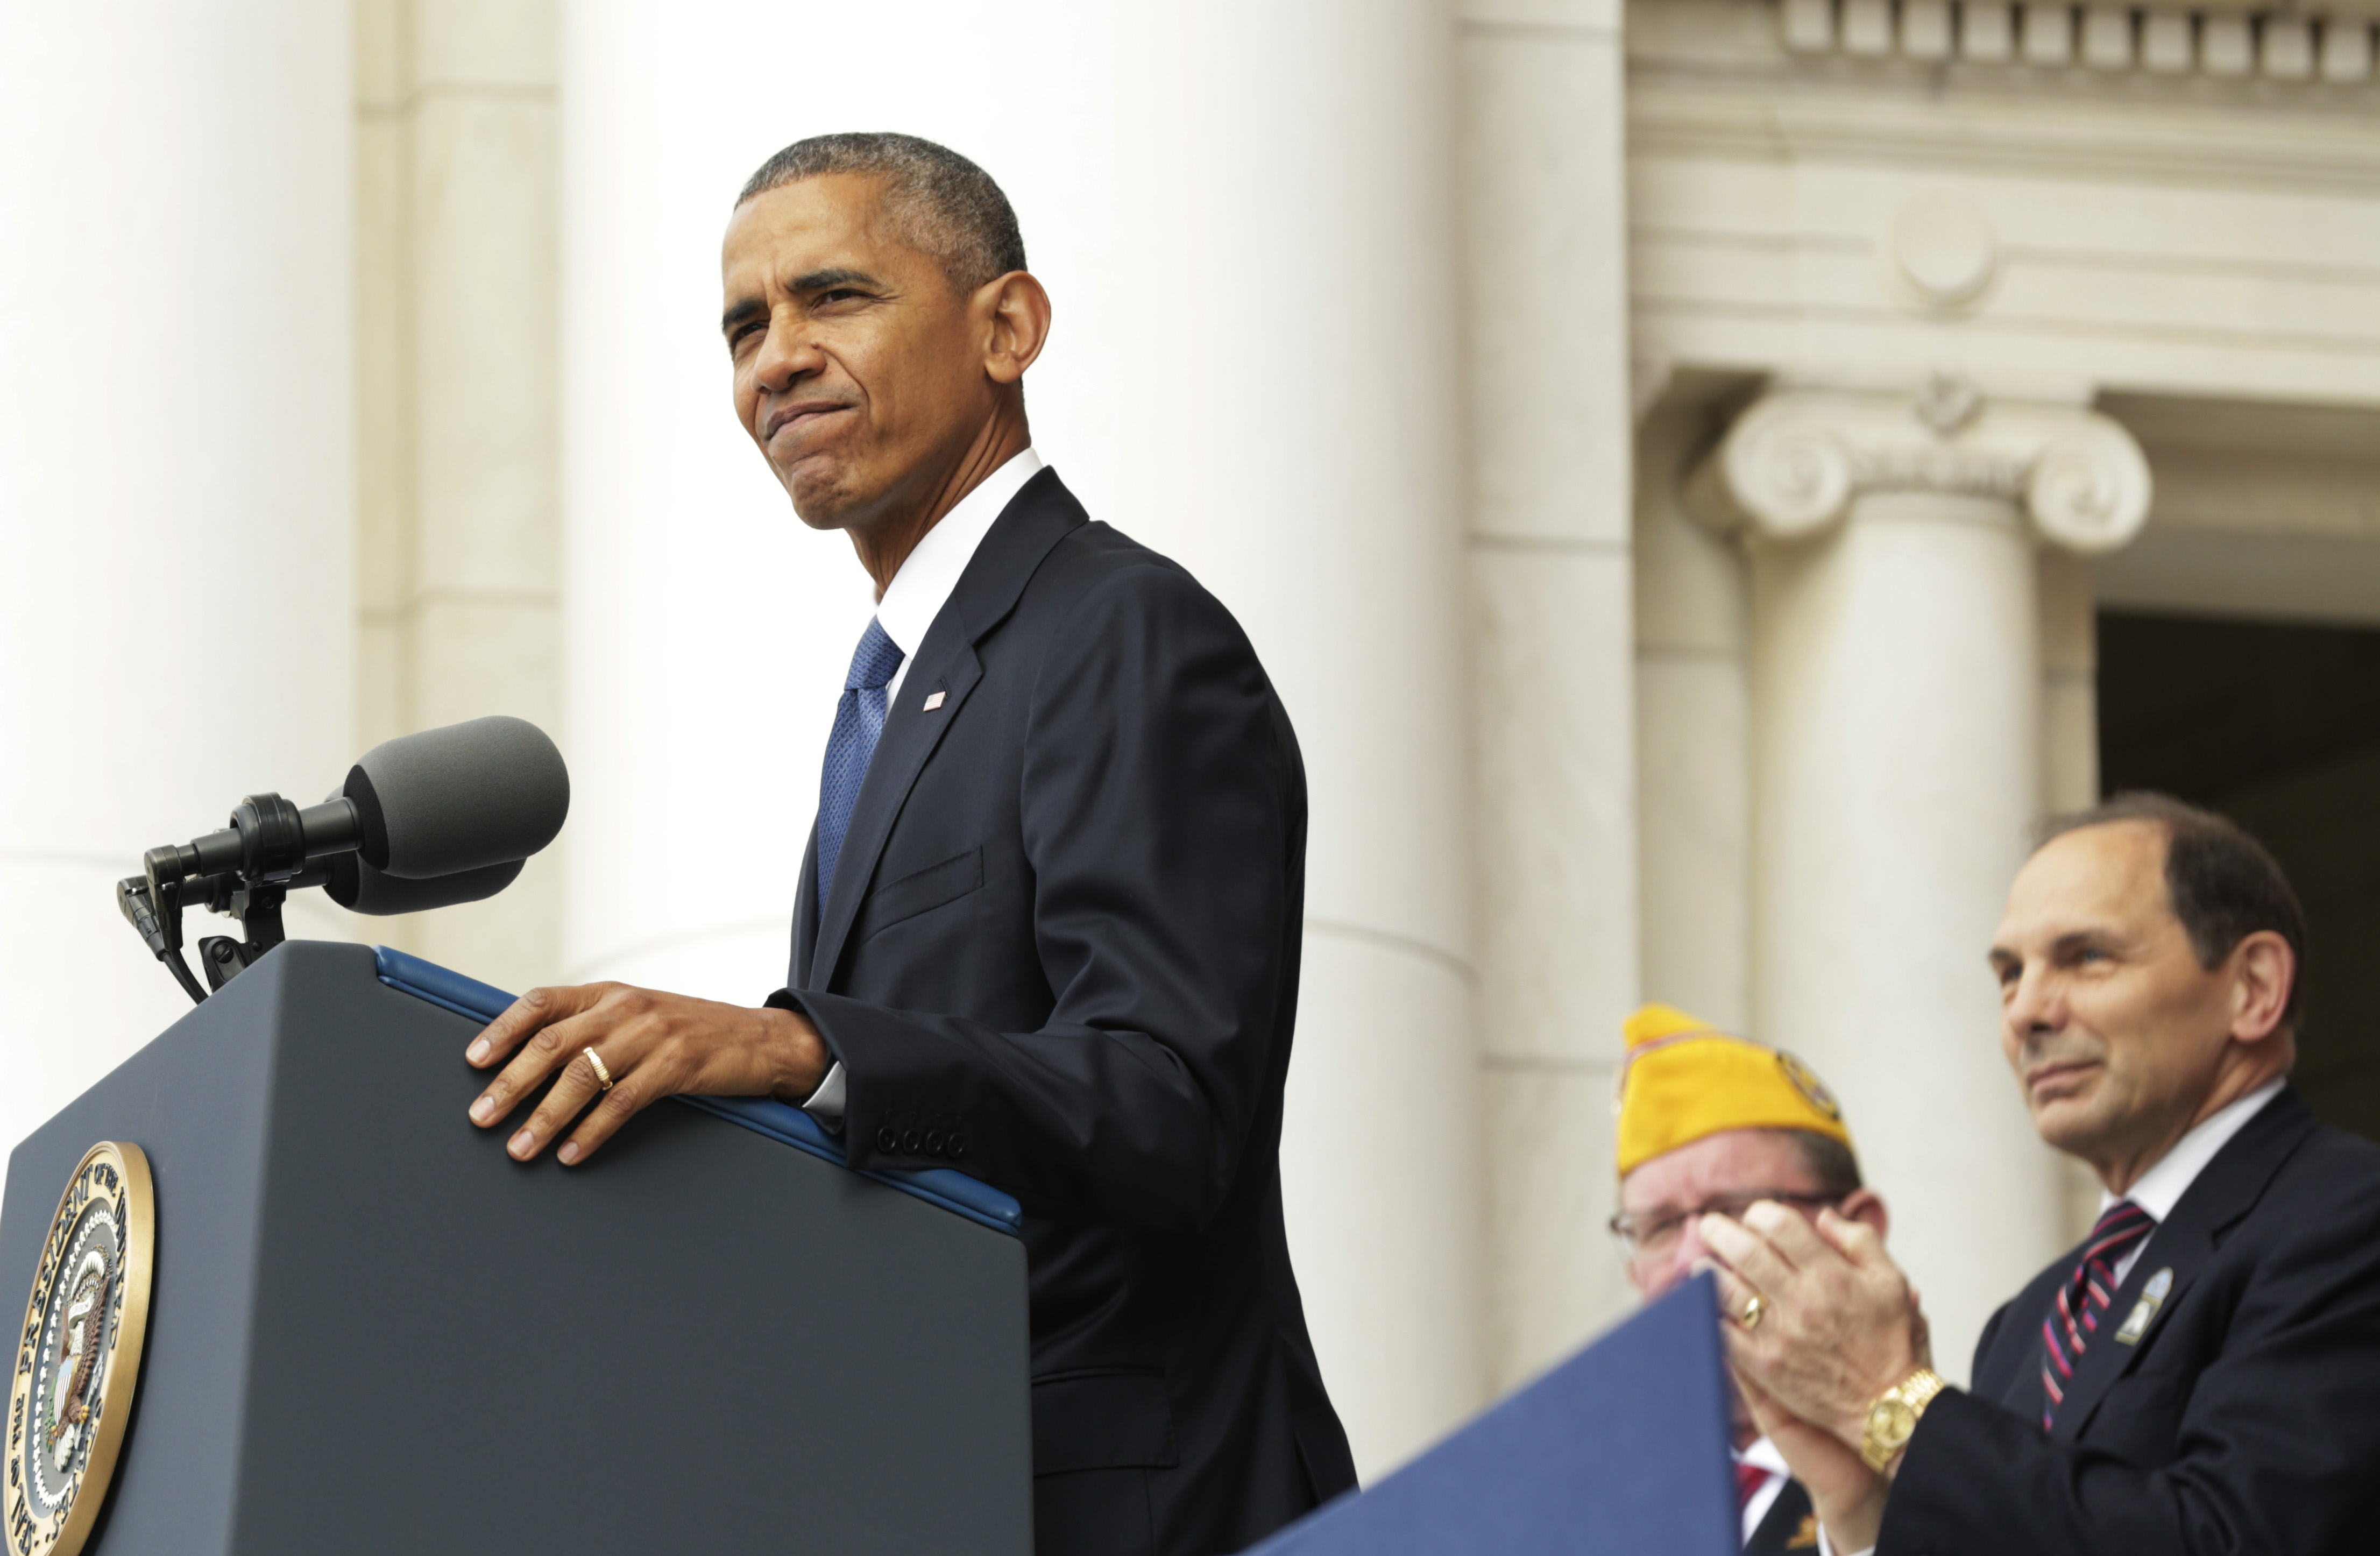 US President Barack Obama speaks at a ceremony to commemorate Veterans Day at Arlington National Cemetery in Arlington, Virginia on November 11, 2016. / AFP PHOTO / YURI GRIPAS